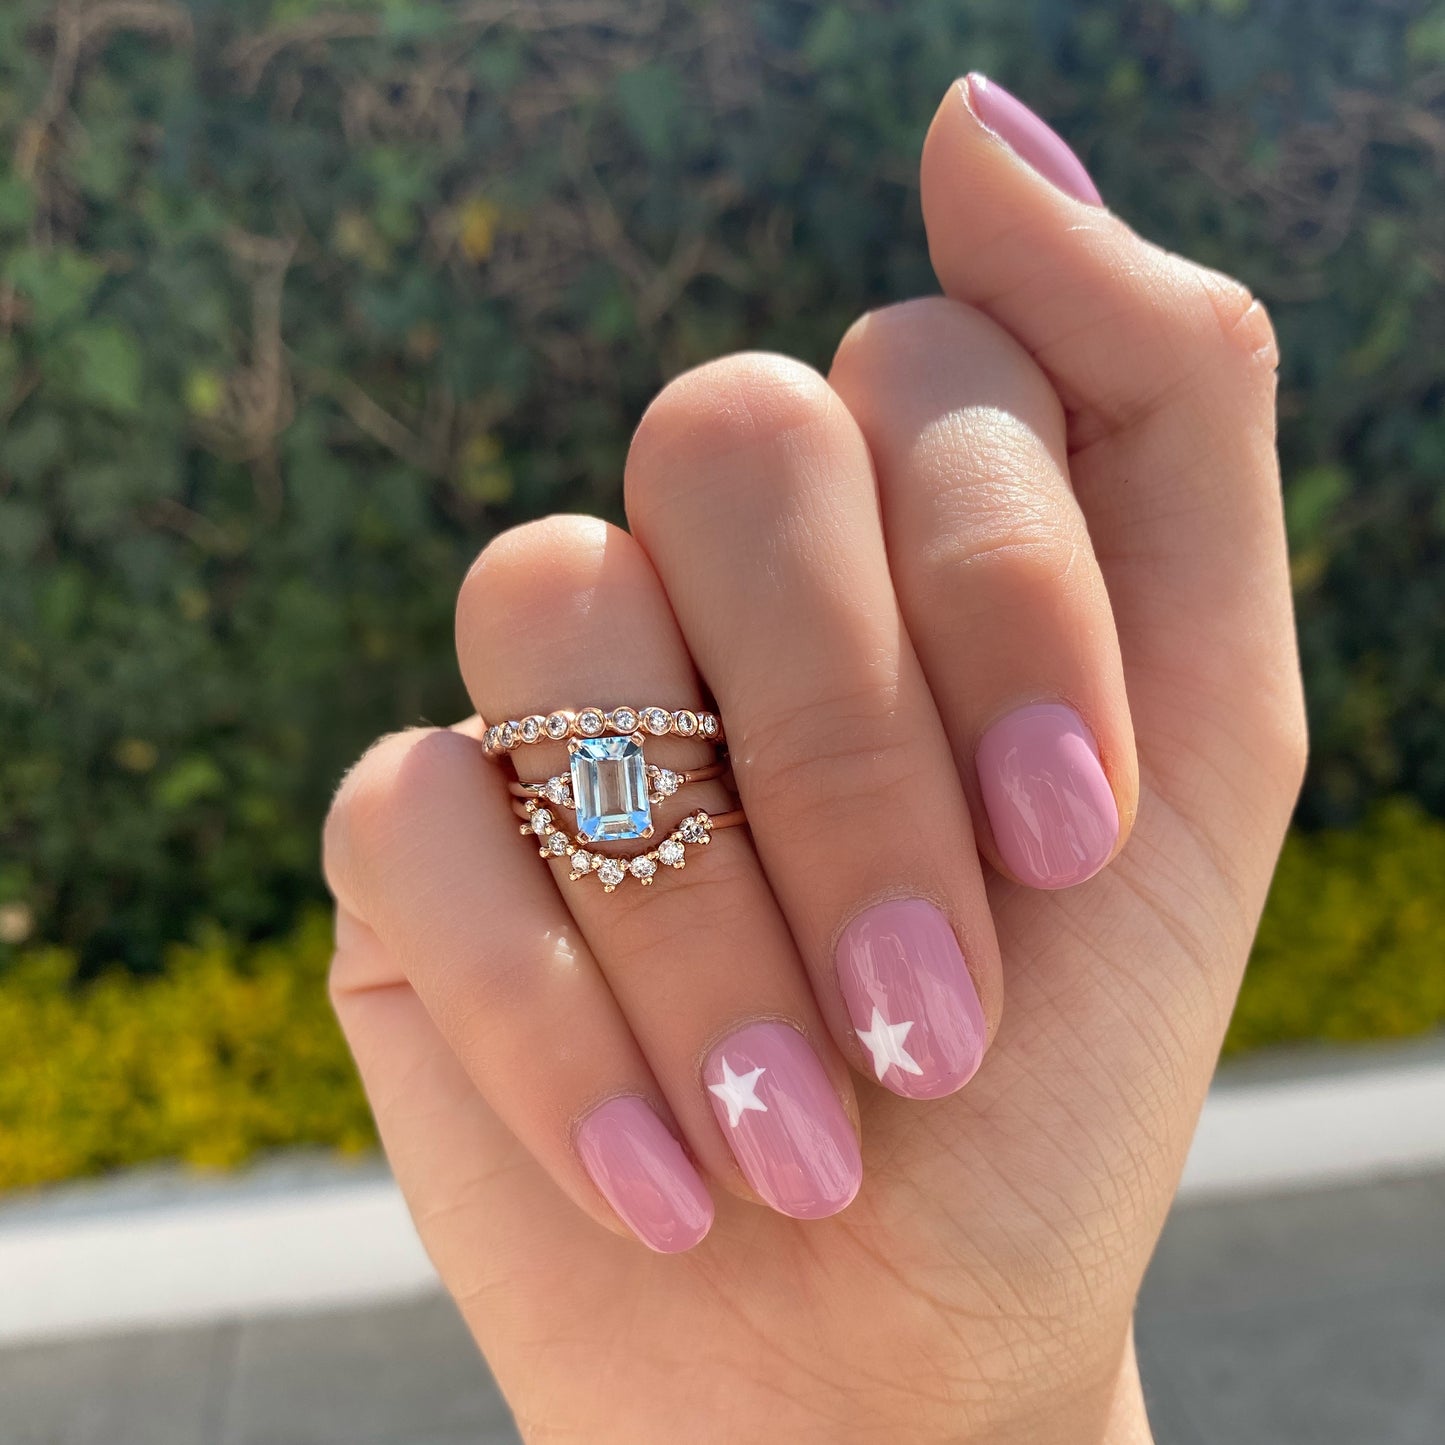 Ximena Aquamarine Ring with Diamonds Special Edition